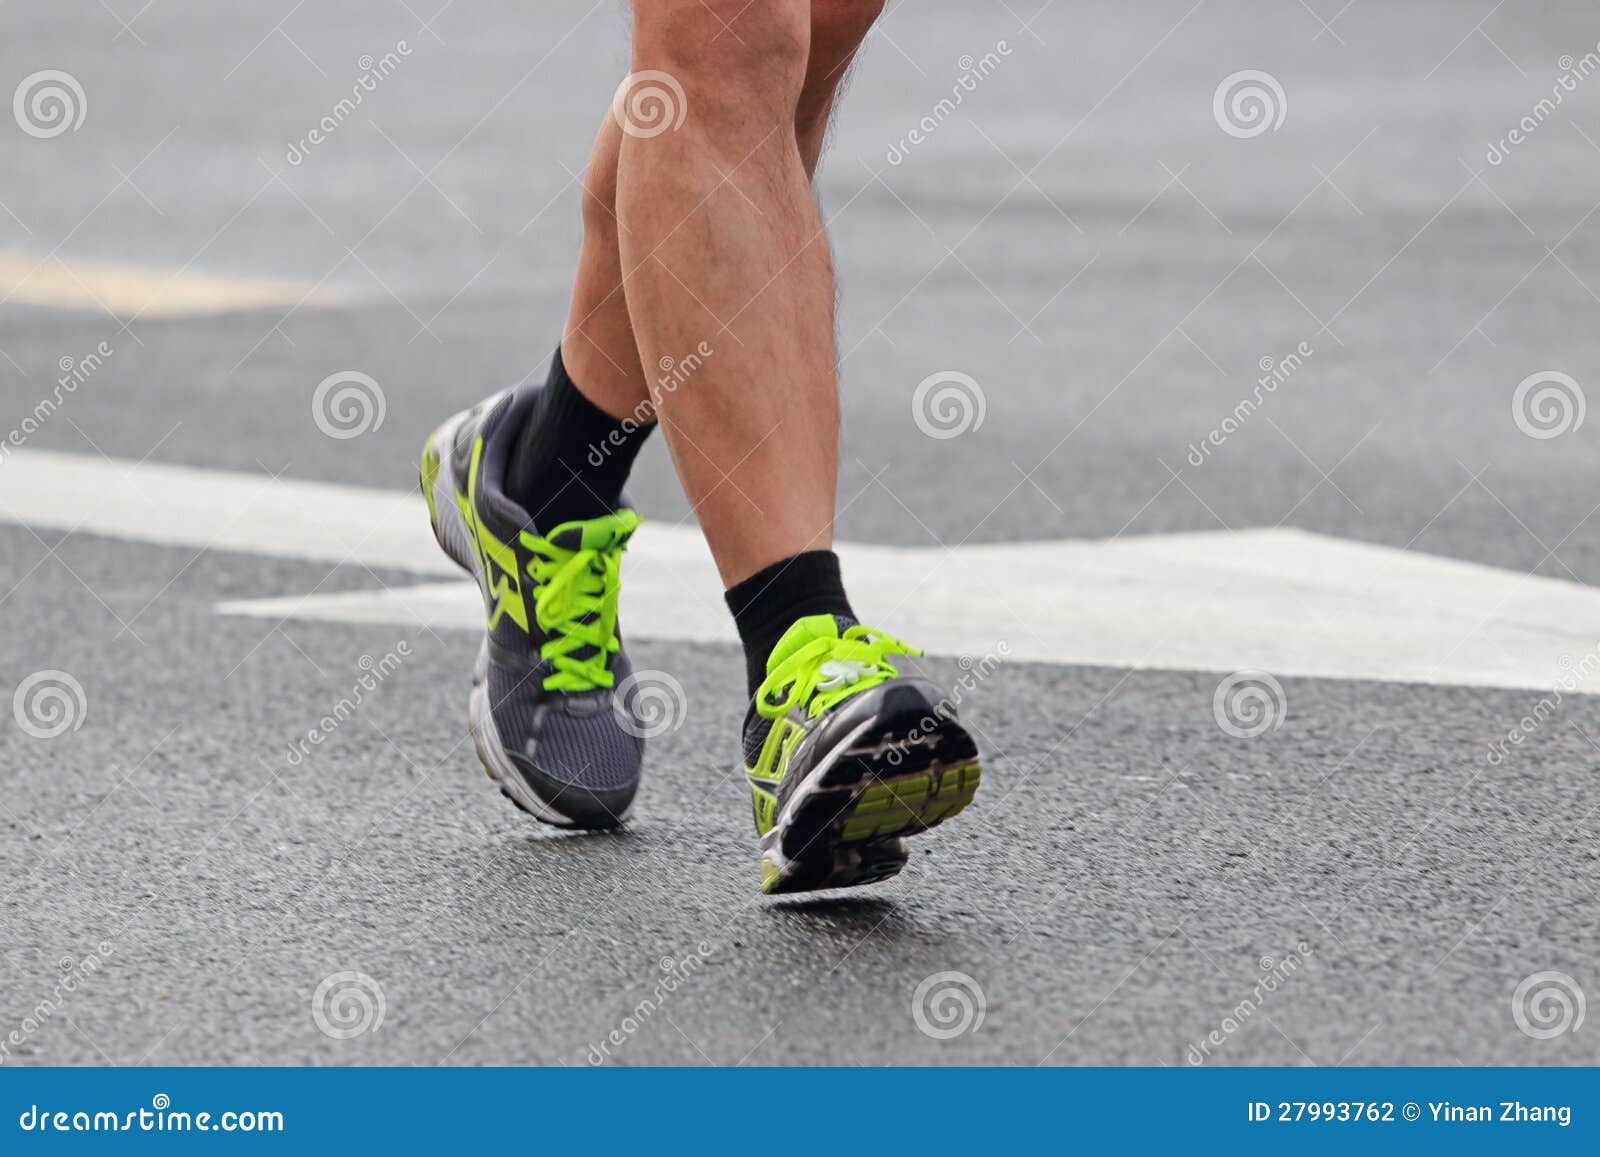 Running stock photo. Image of sunny, fitness, transverse - 27993762